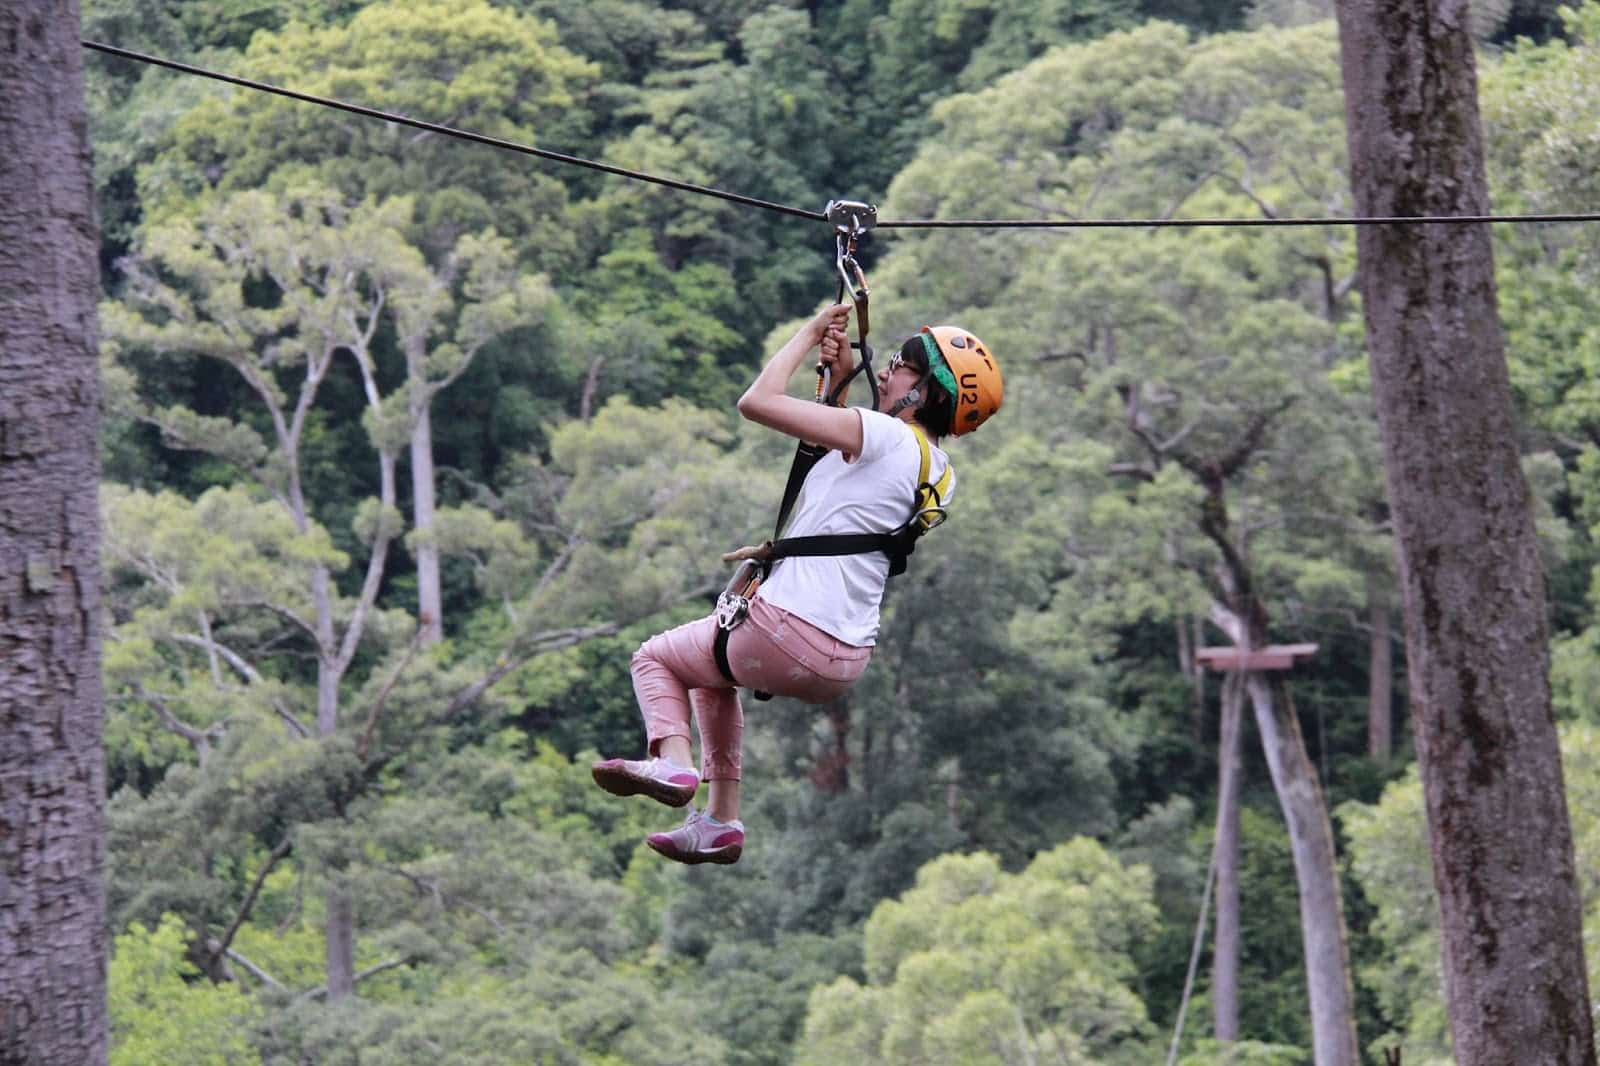 An elderly woman ziplining at Jungle Flight